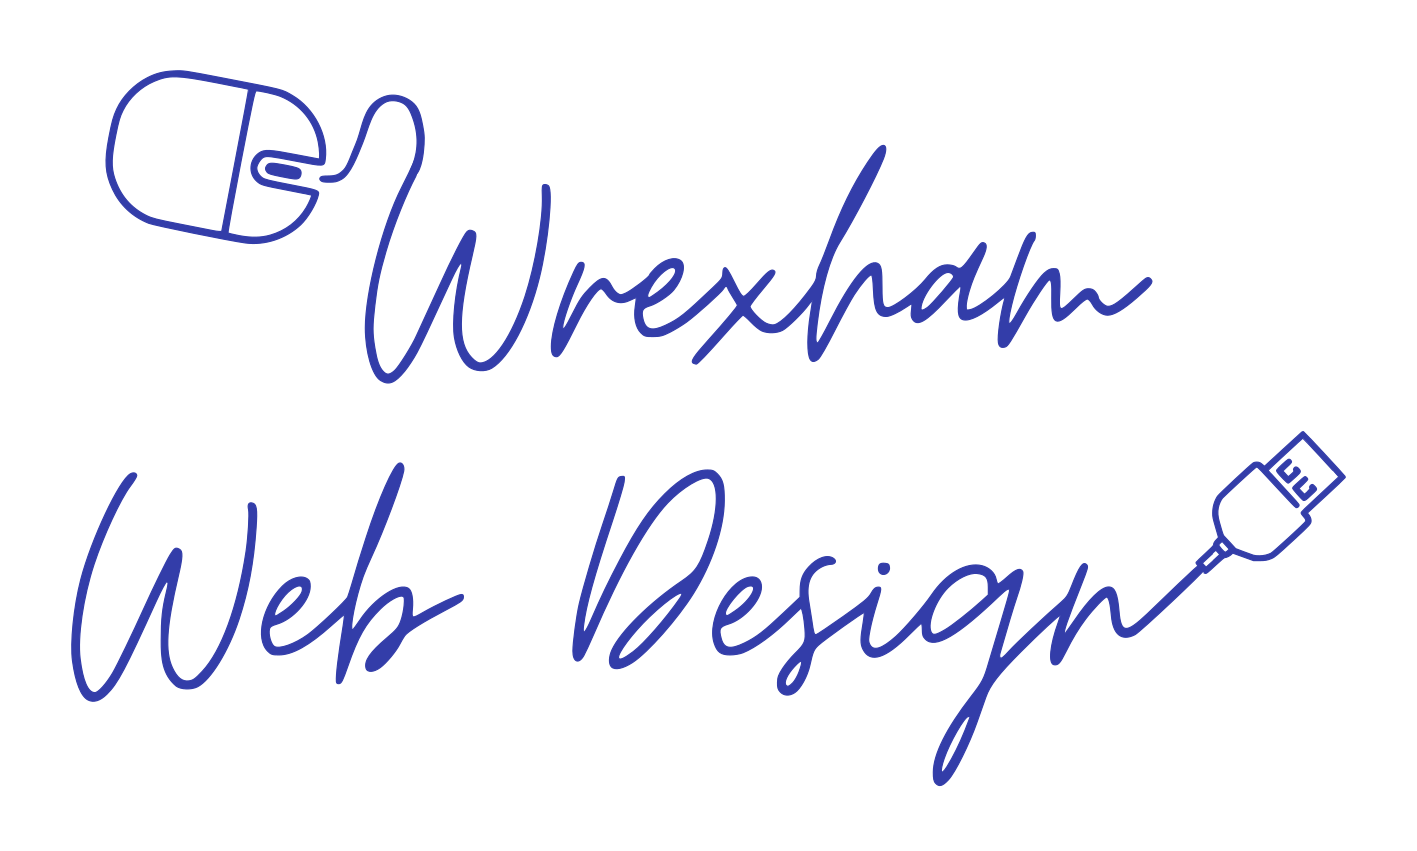 Company logo image - Ellis Chaplin Limited t/a Wrexham Web Design